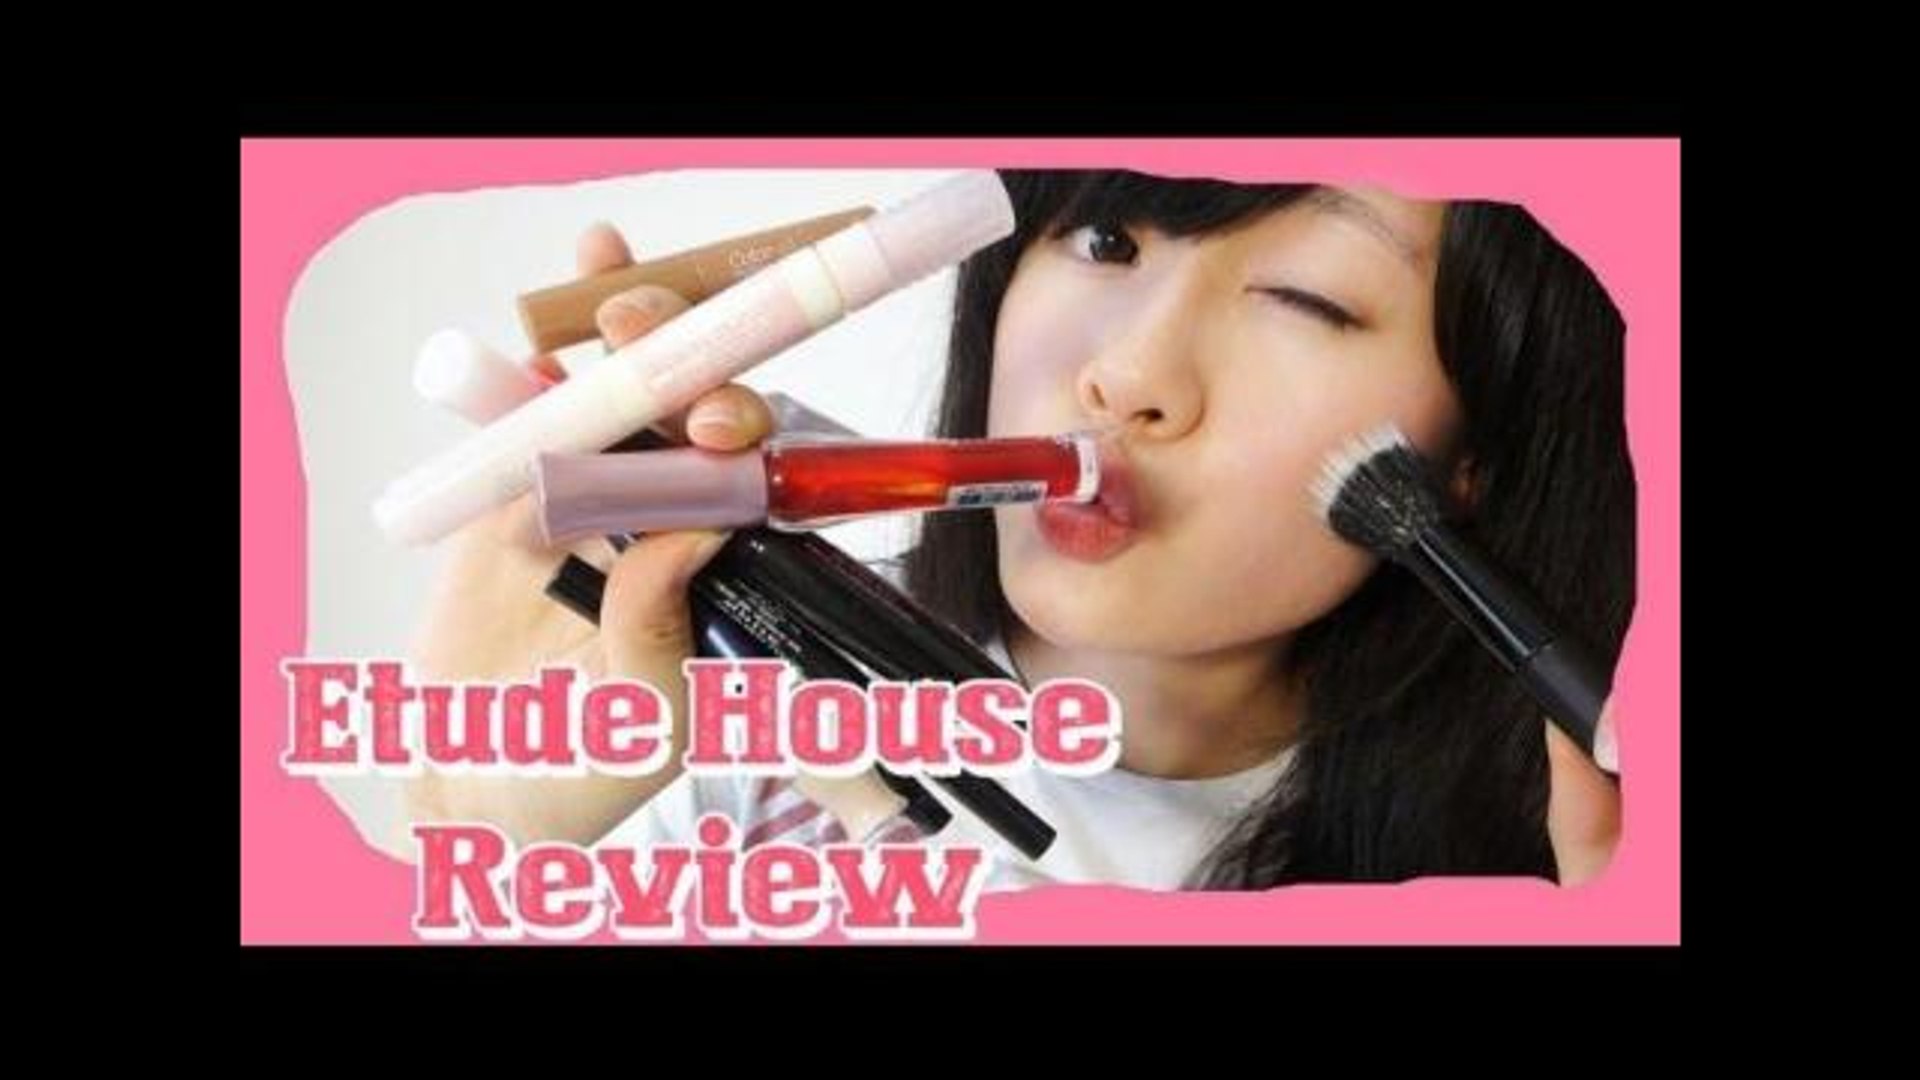 ⁣Etude House Review 愛麗小屋產品用後感分享+回應 Top 3 comments